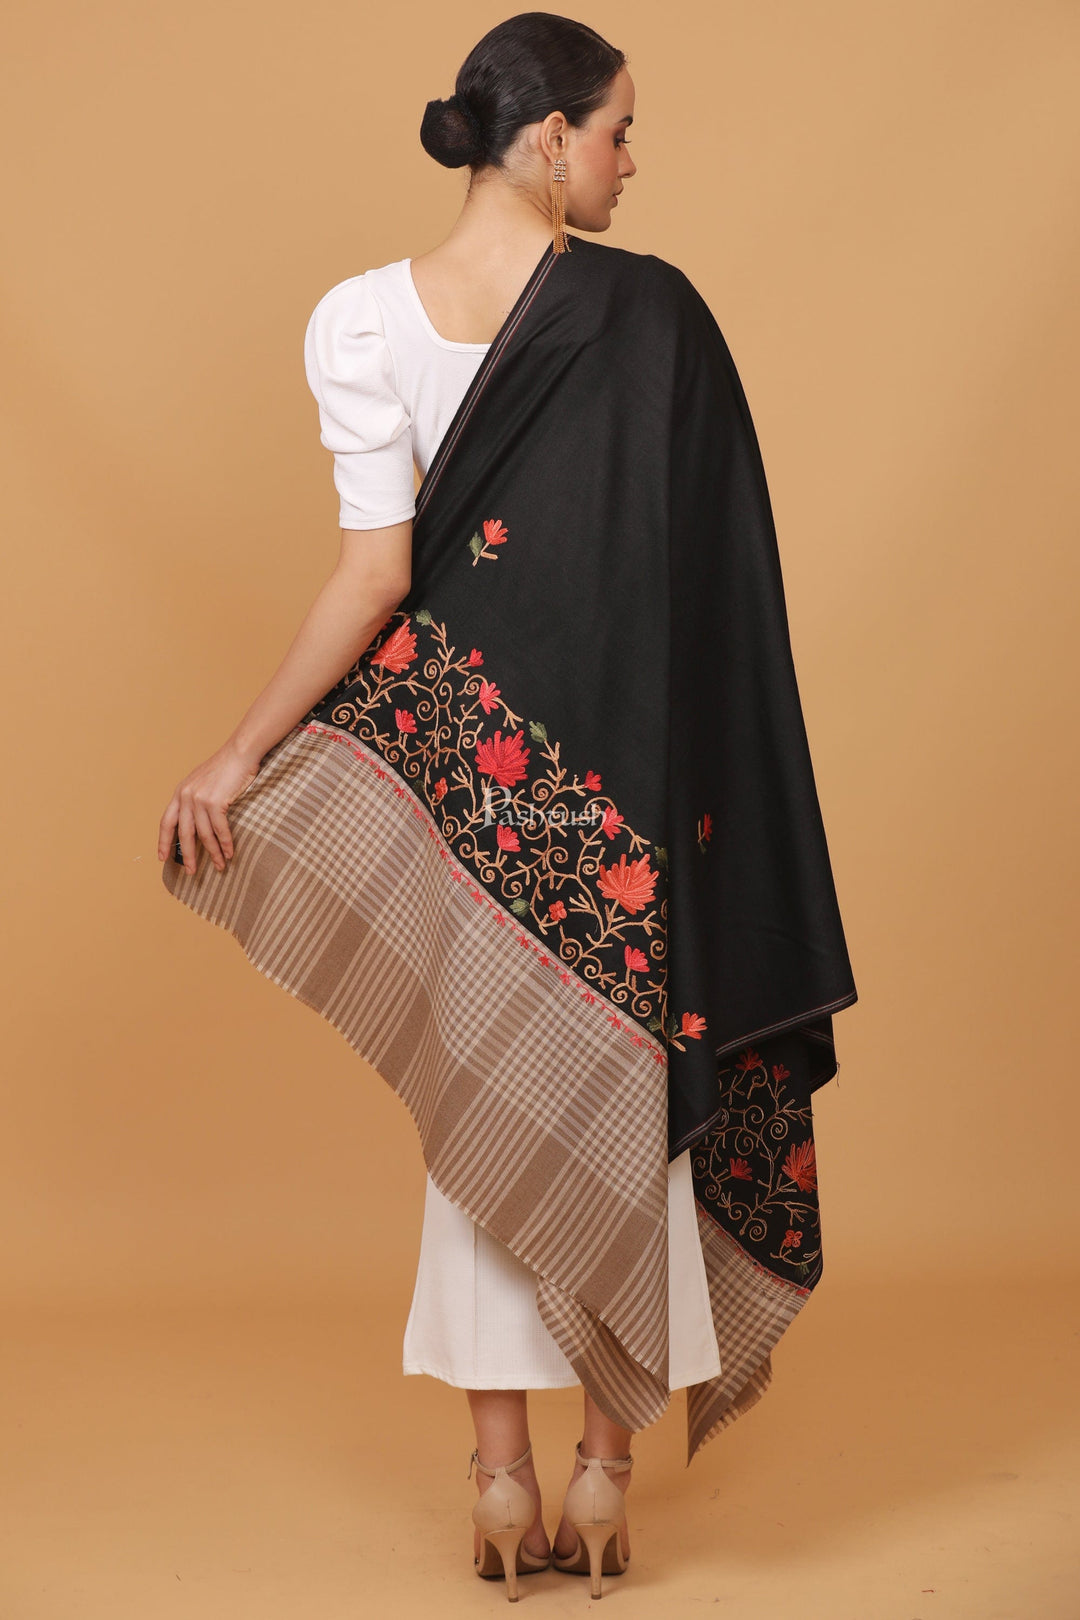 Pashtush India Womens Stoles and Scarves Scarf Pashtush womens Fine Wool shawl, contrast chess palla design, Black